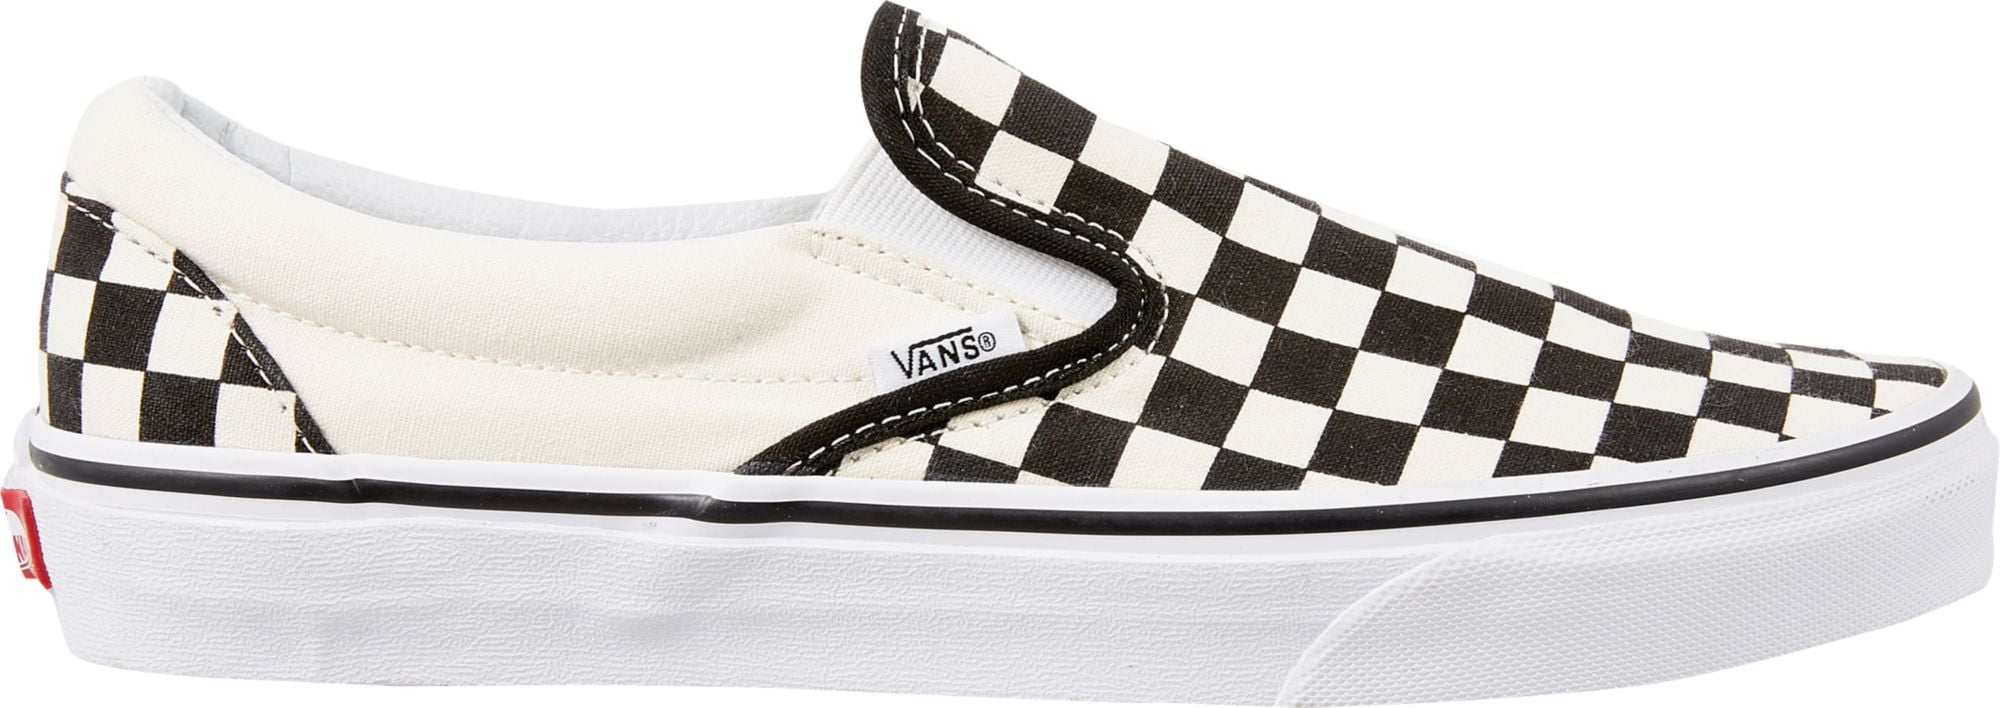 Vans Women's Checkerboard Slip-On Shoes 